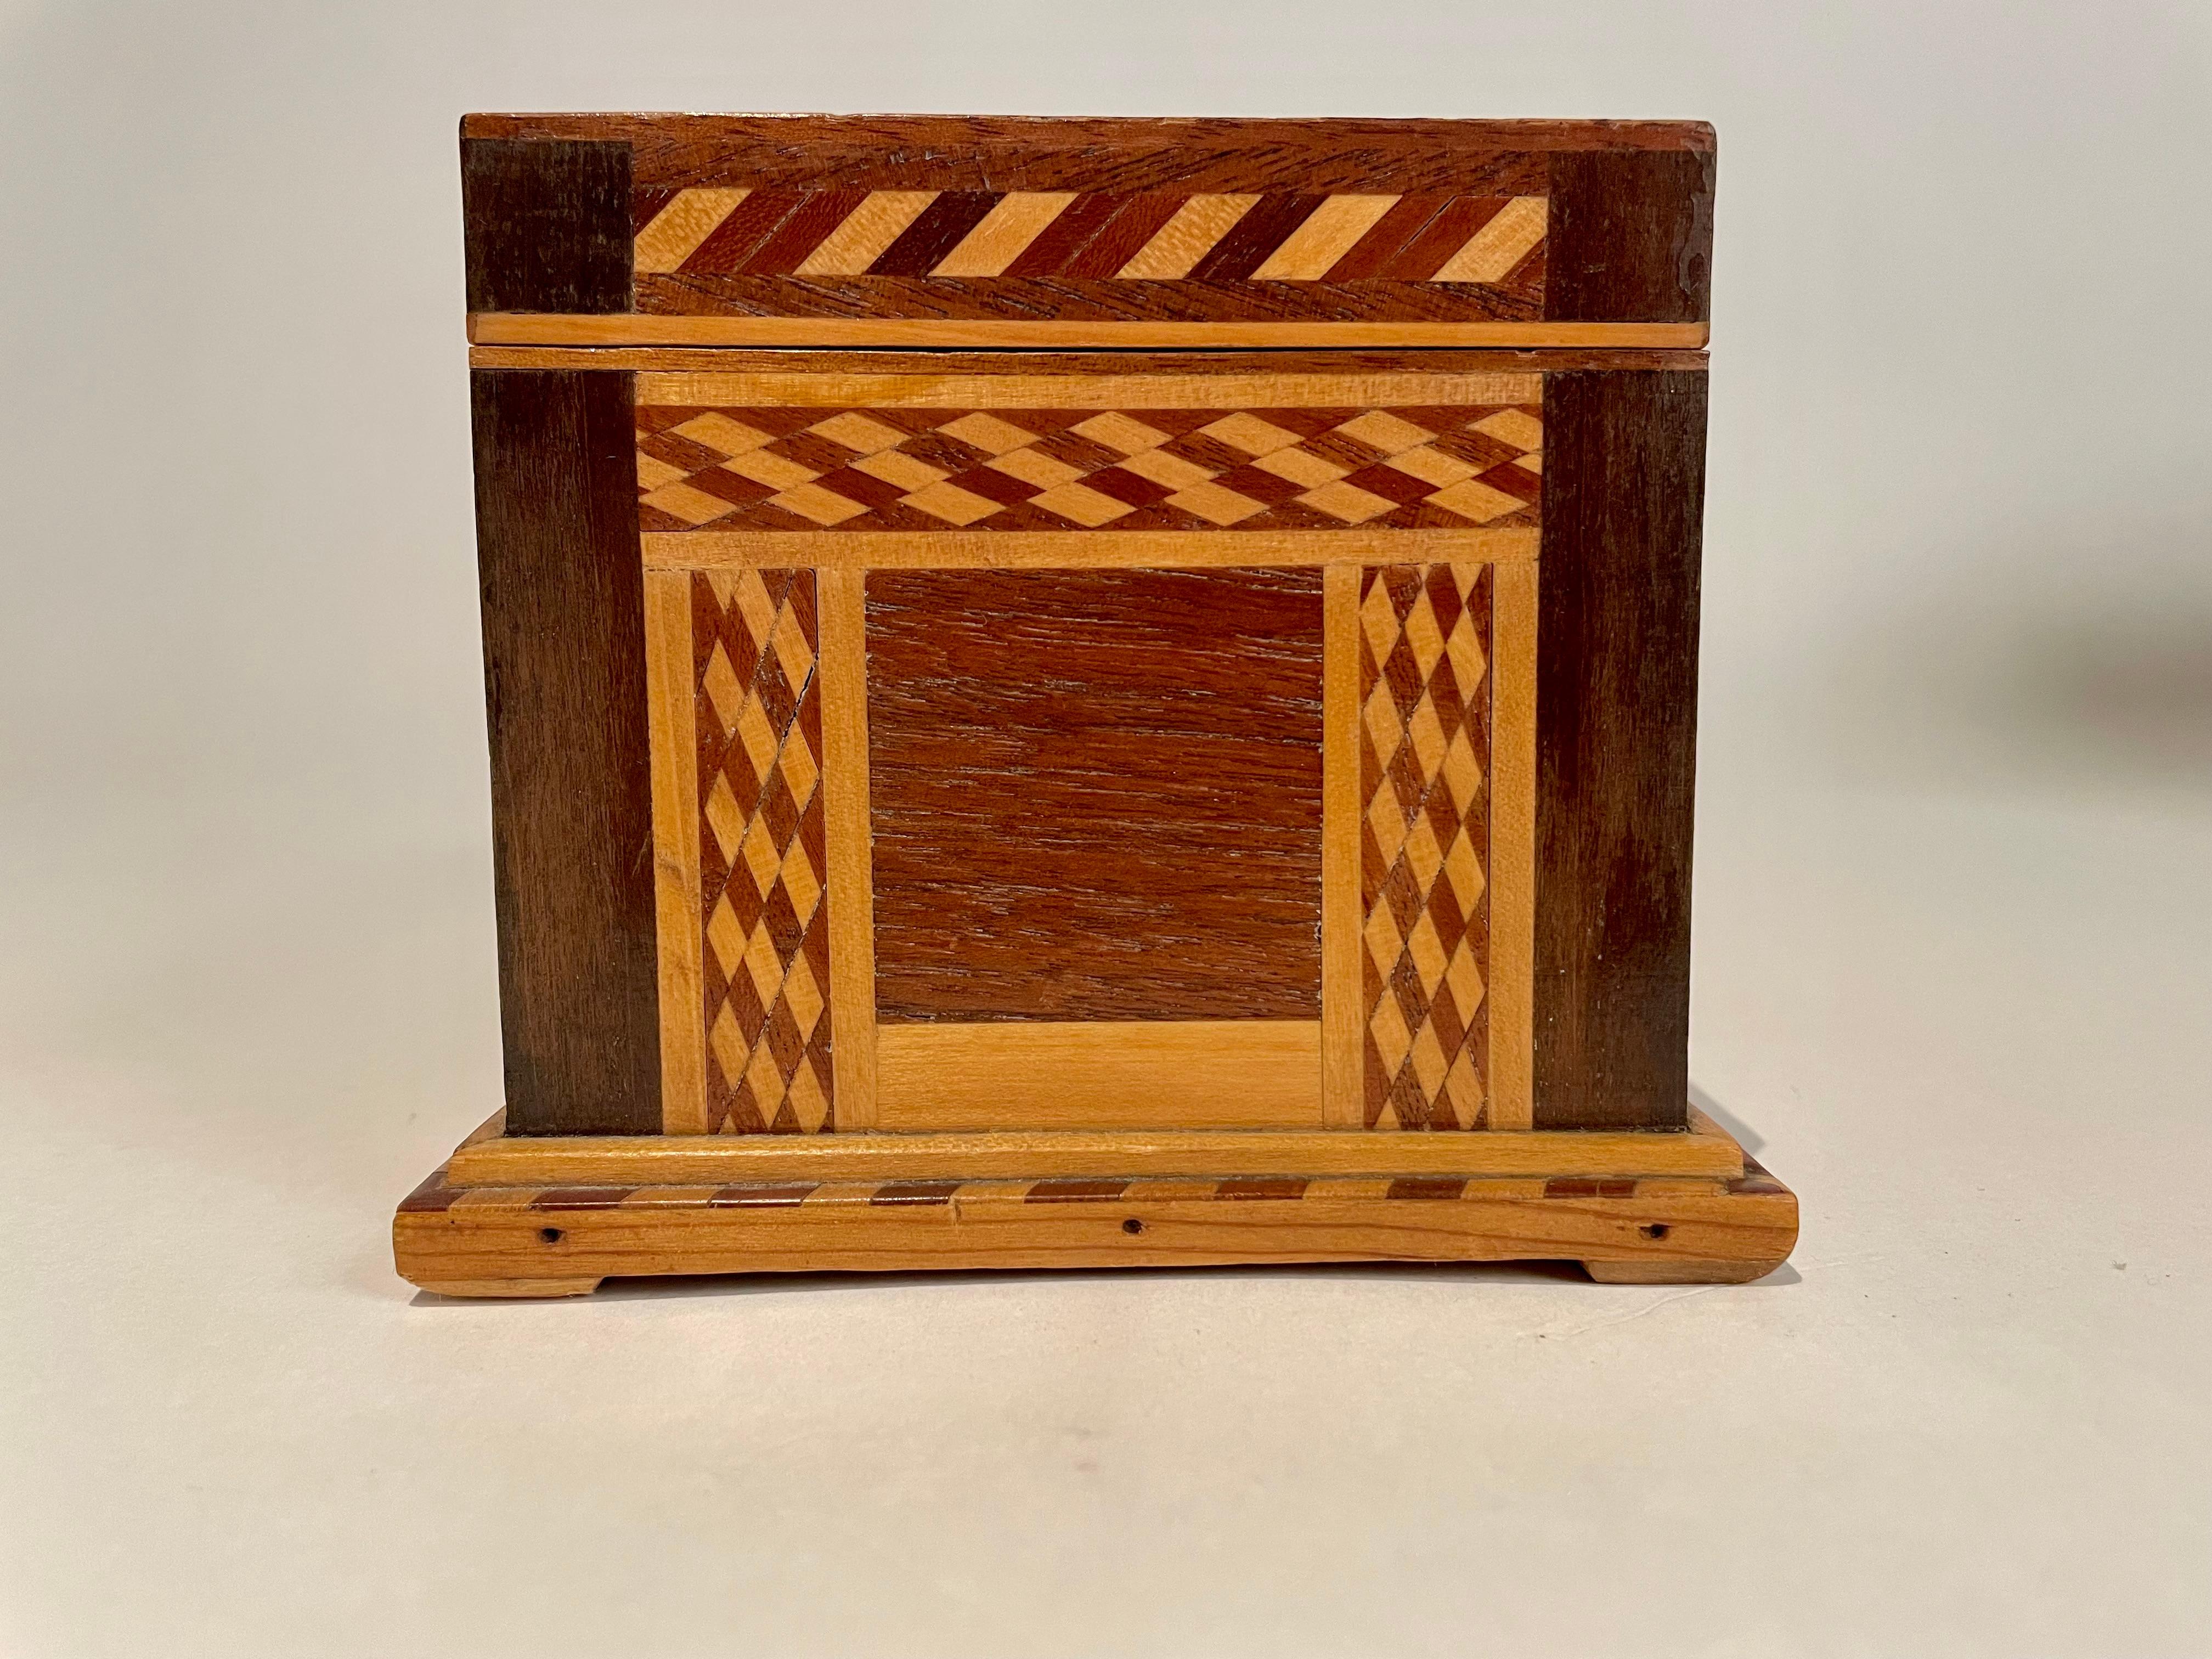 19th Century 19th C American Walnut Box With Geometric And Starburst Fruitwood Inlay